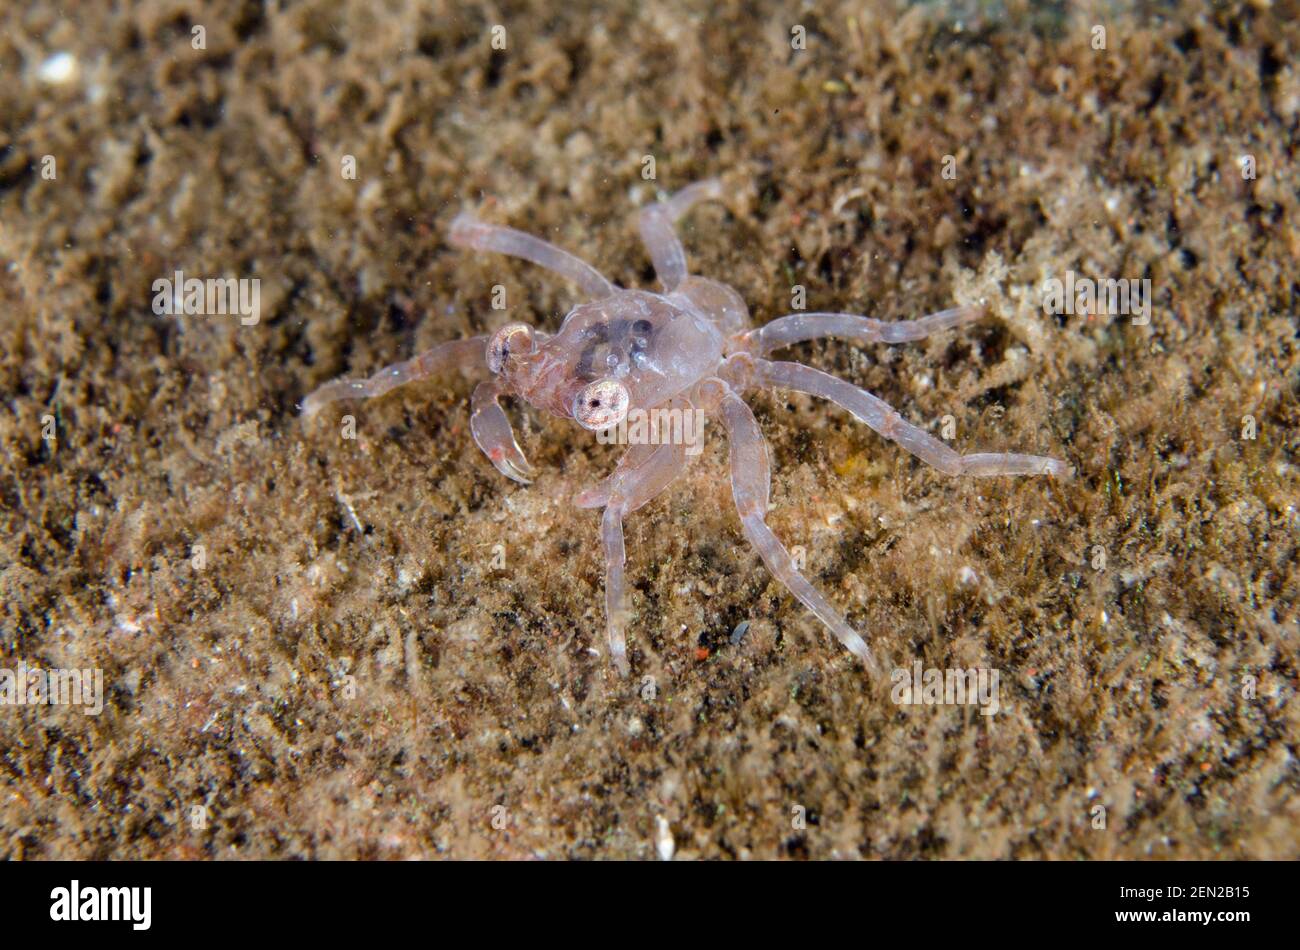 Juvenile Grapsid Crab, Grapsidae Family, night dive, Seraya Secrets dive site, Seraya, Karangasem, Bali, Indonesia, Indian Ocean Stock Photo